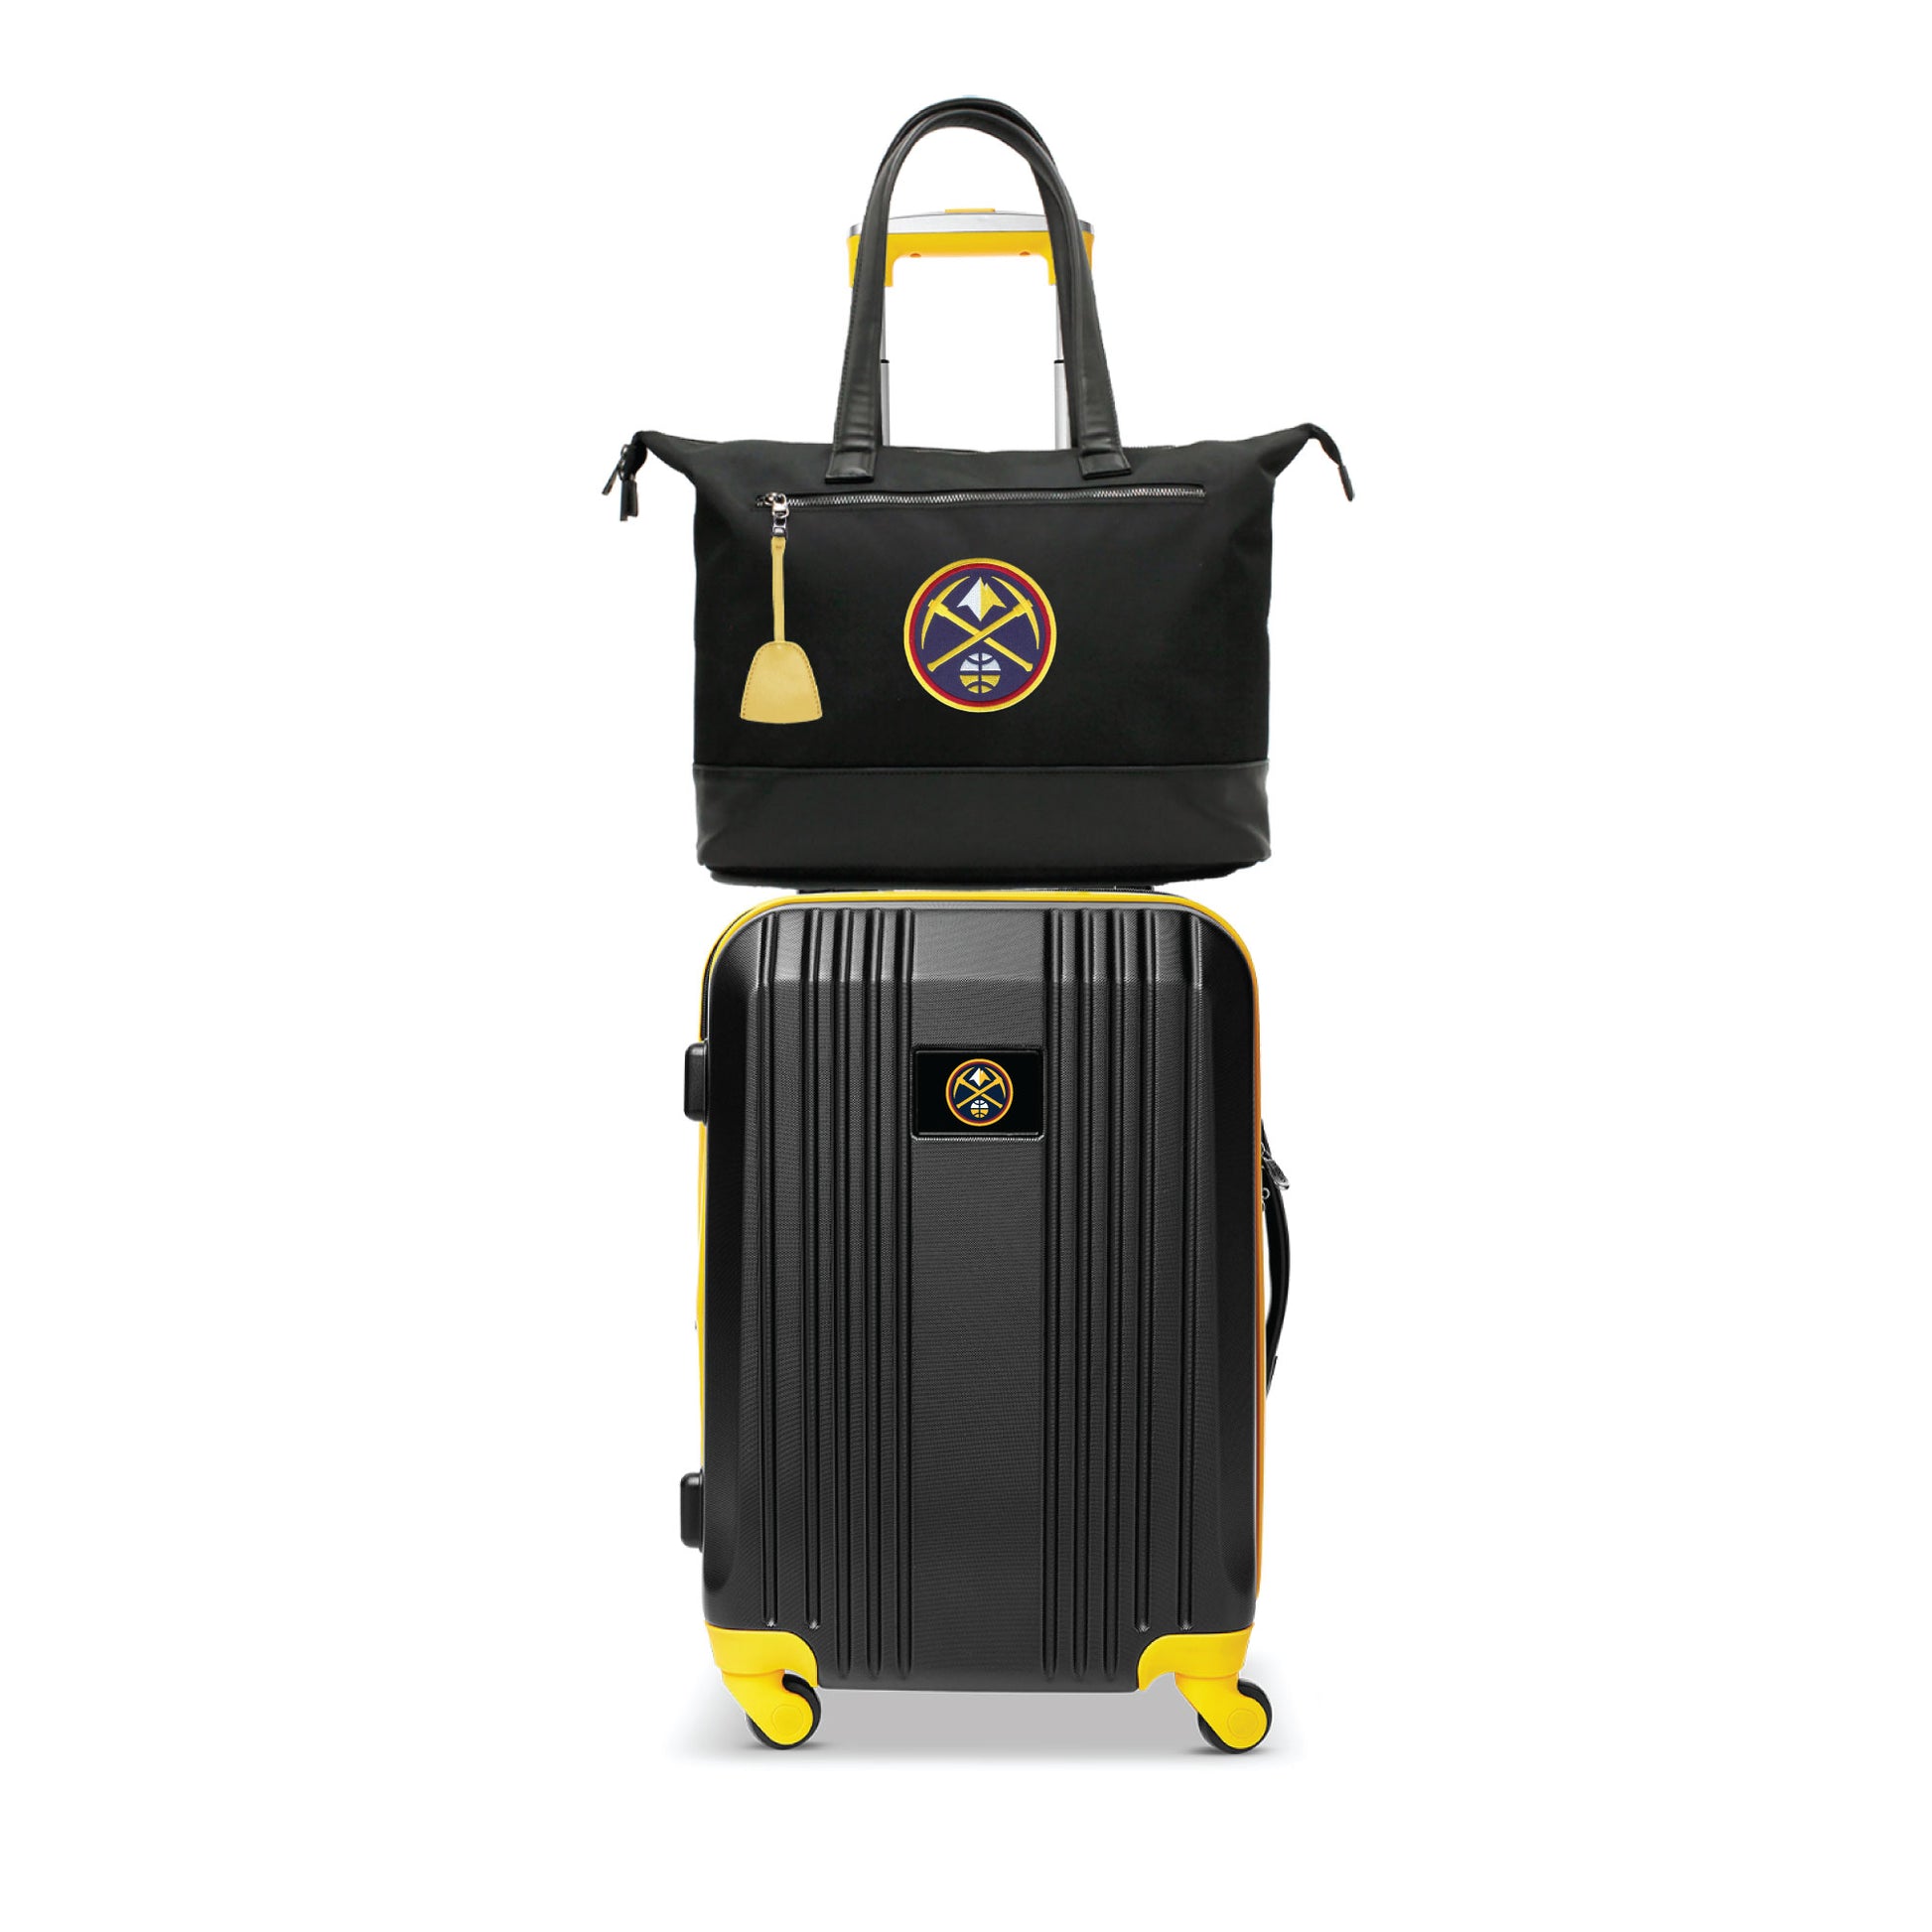 Denver Nuggets Premium Laptop Tote Bag and Luggage Set